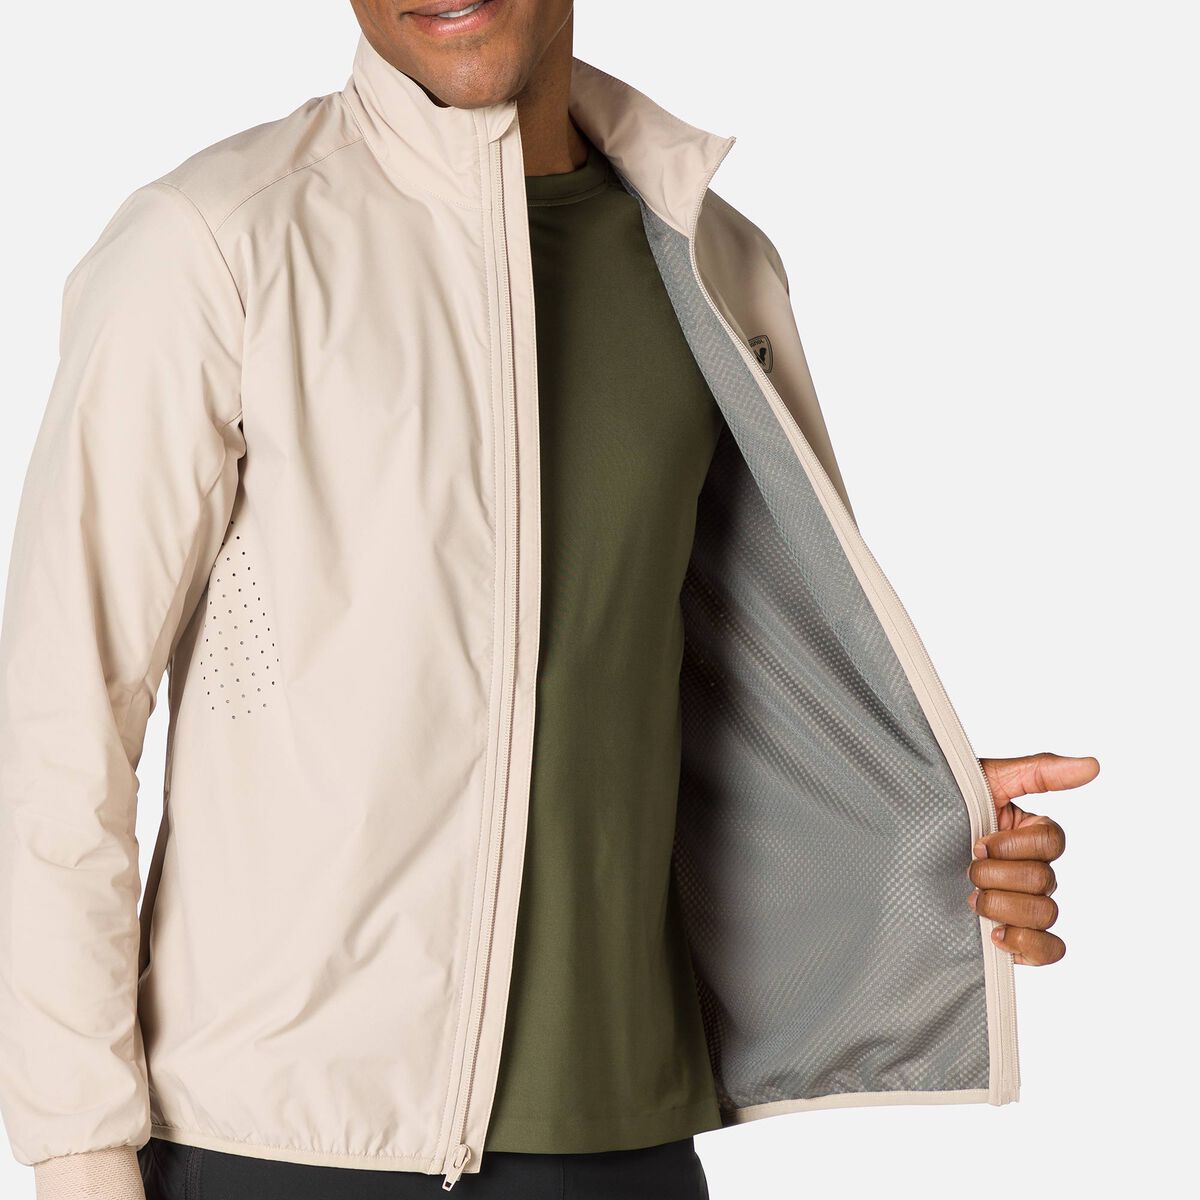 Men's Active Versatile XC Ski Jacket | Softshell & lightweight jackets ...